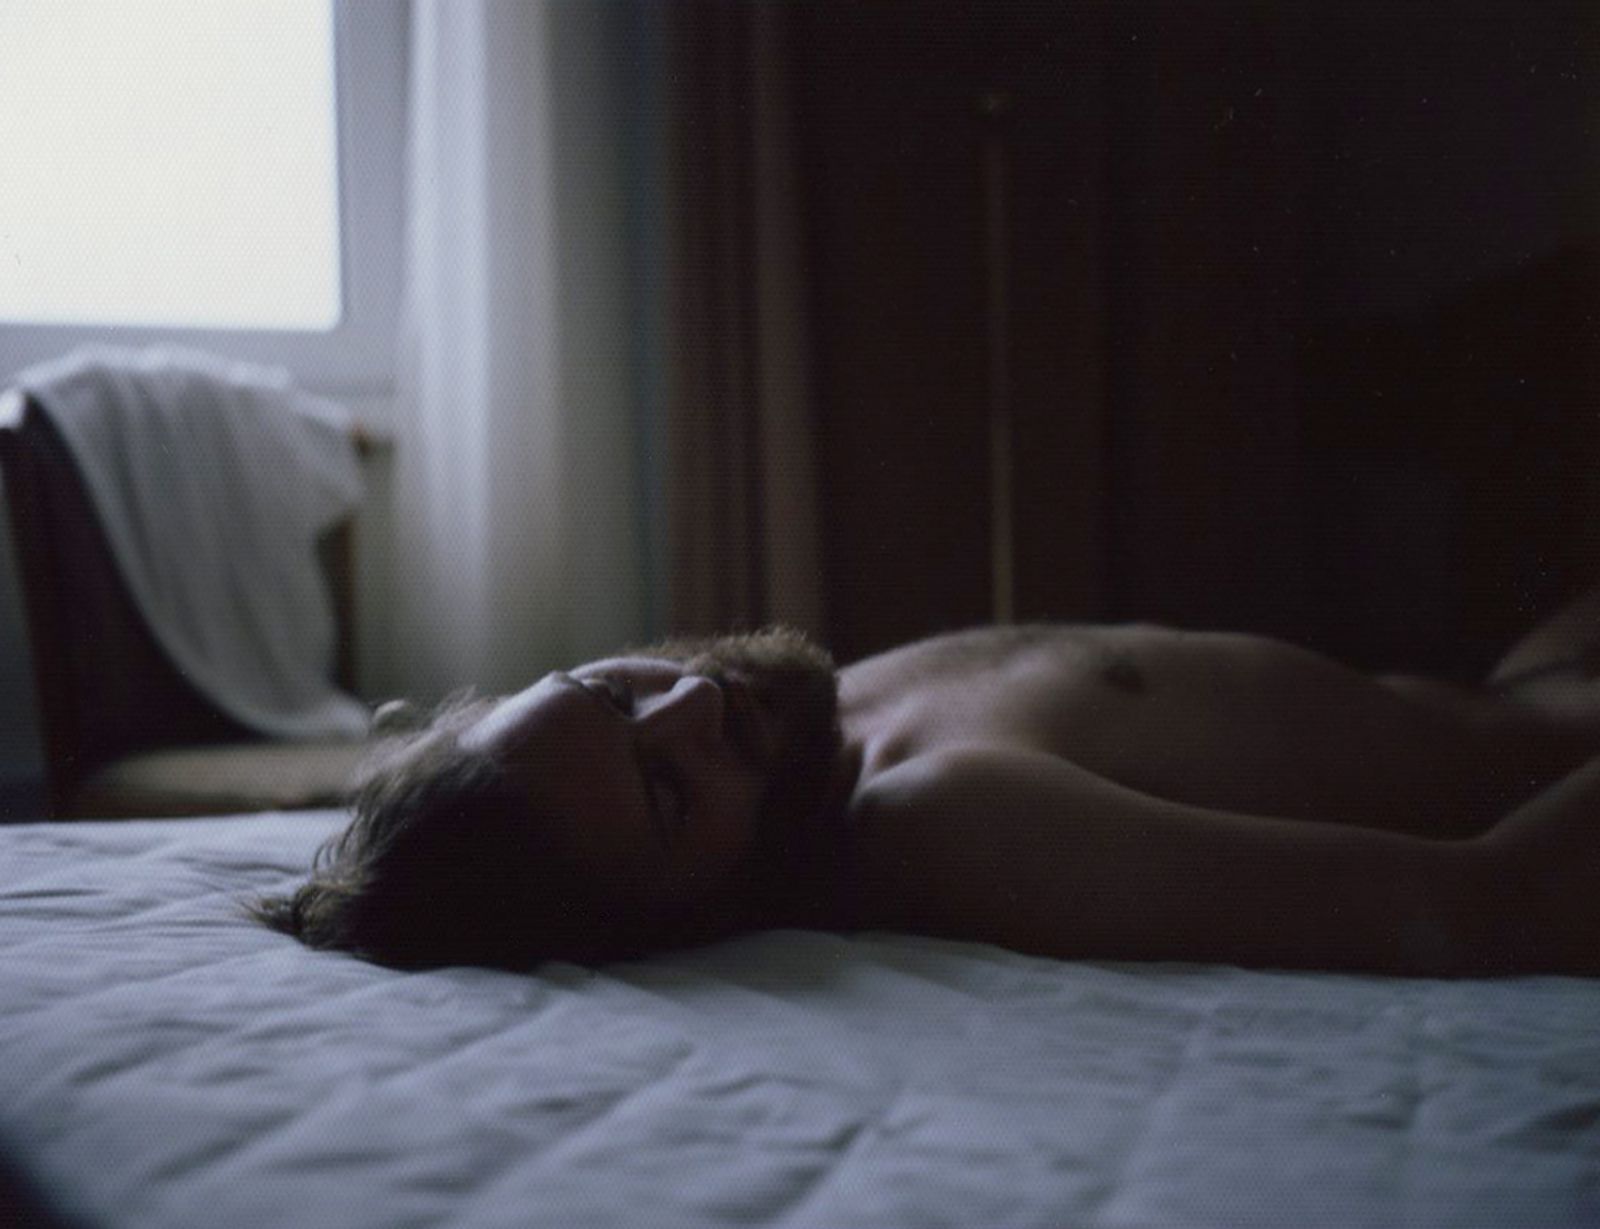 © Ekaterina Anokhina - Image from the Nudes photography project